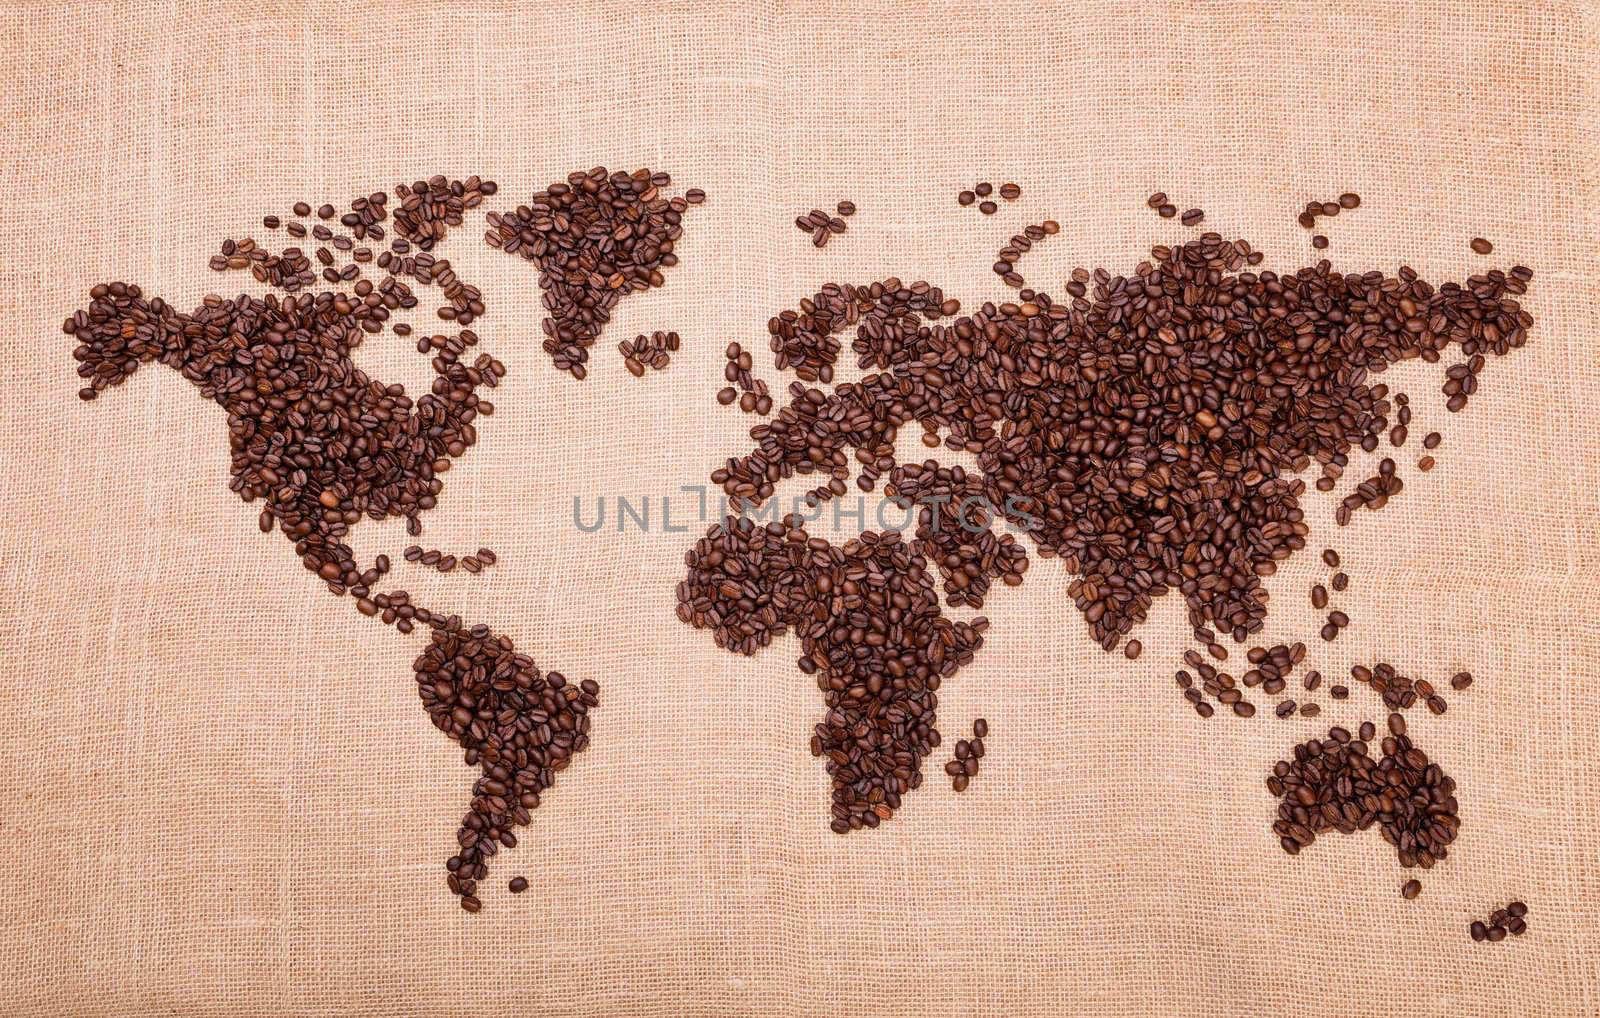 Map made of coffee by igor_stramyk